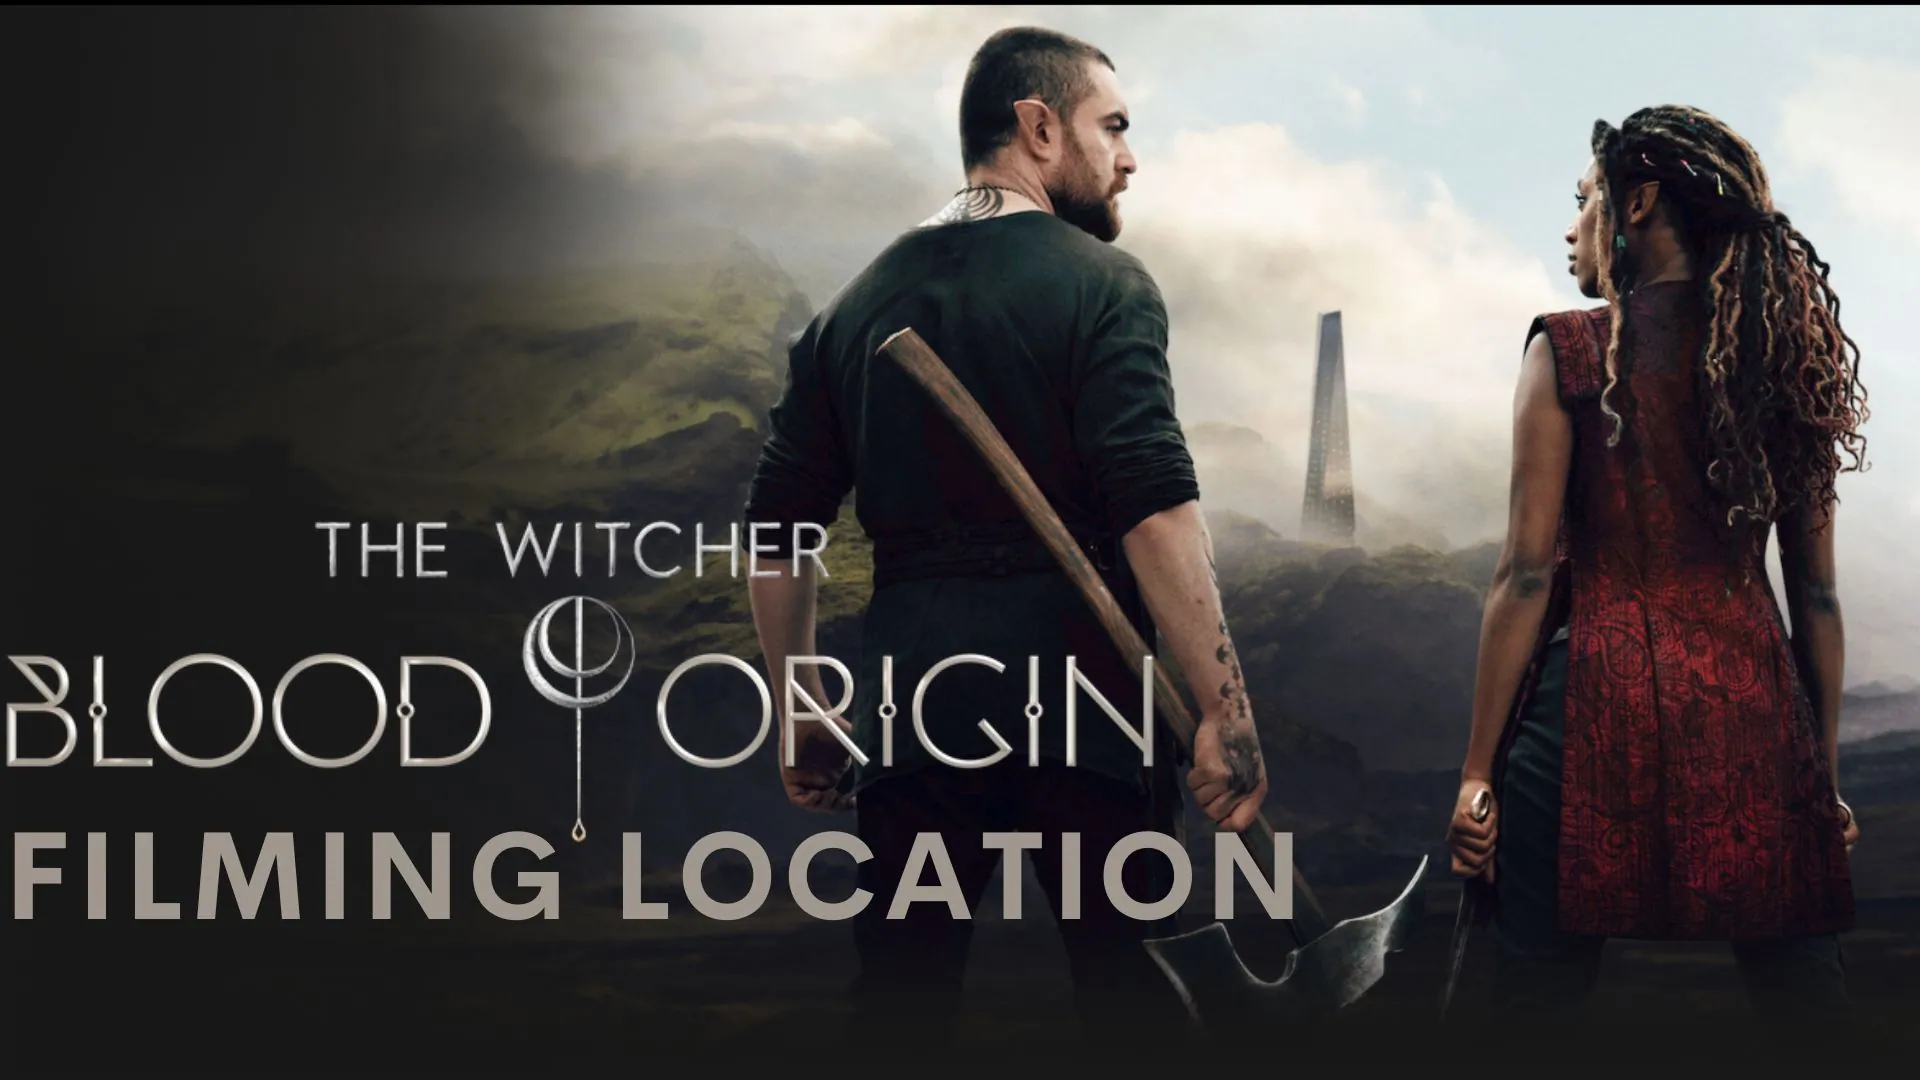 The Witcher: Blood Origin Filming Location- Where Was Blood Origin Filmed